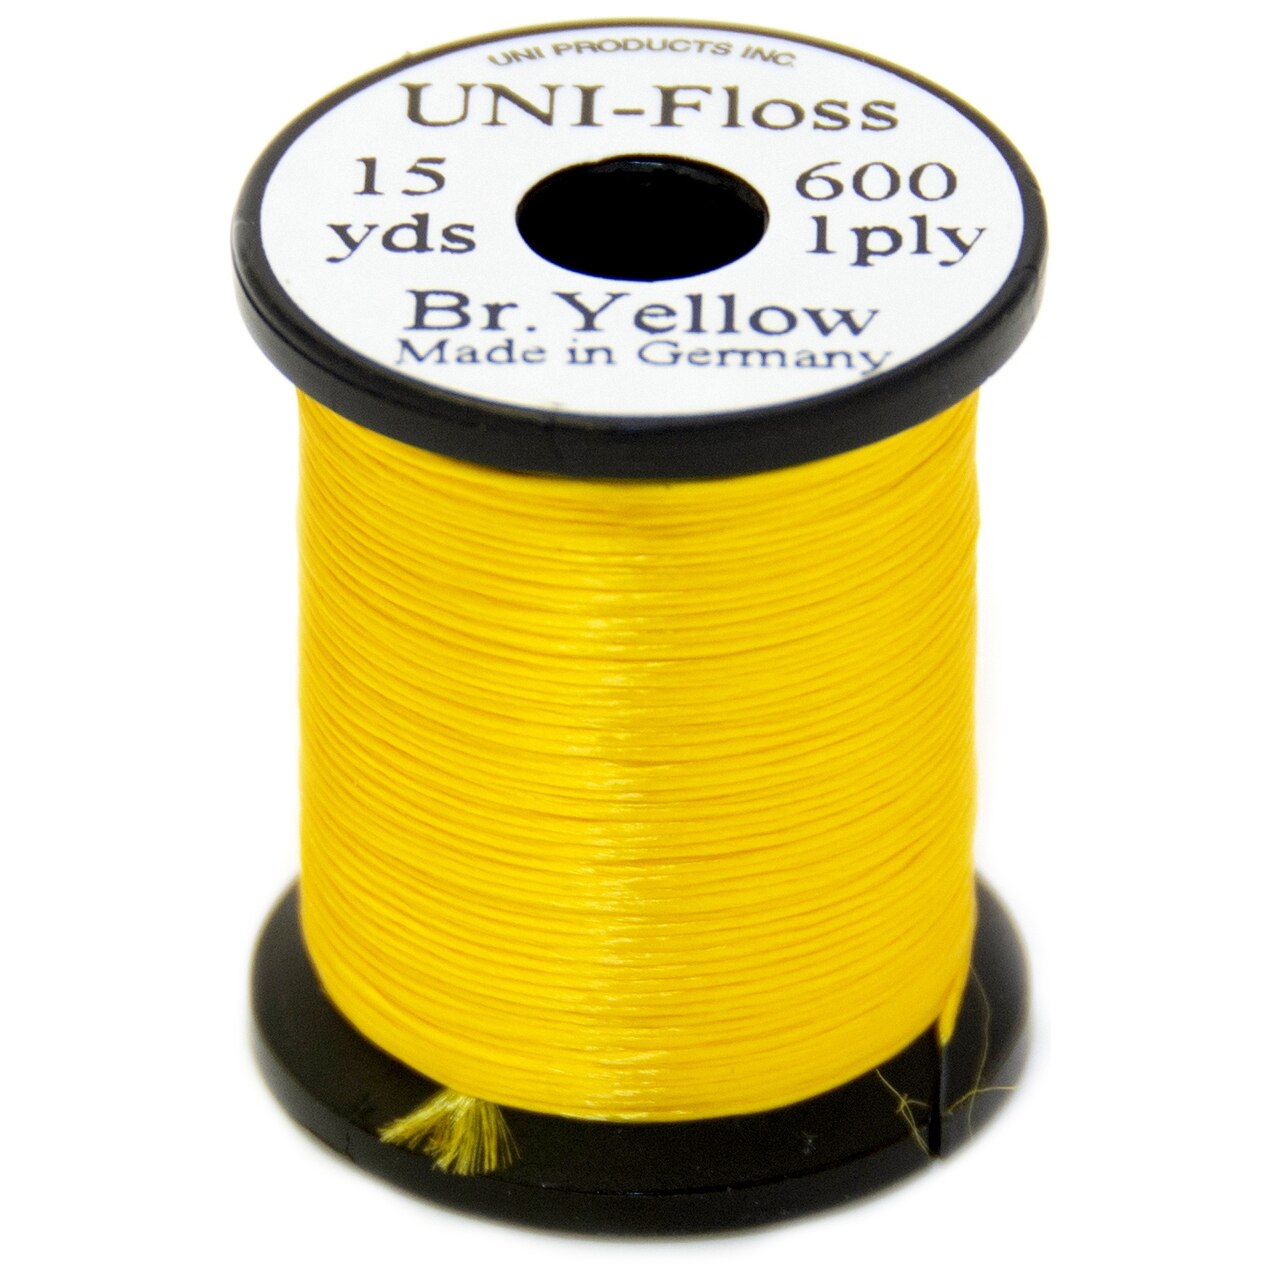 UNI Floss 15yds - Bright yellow